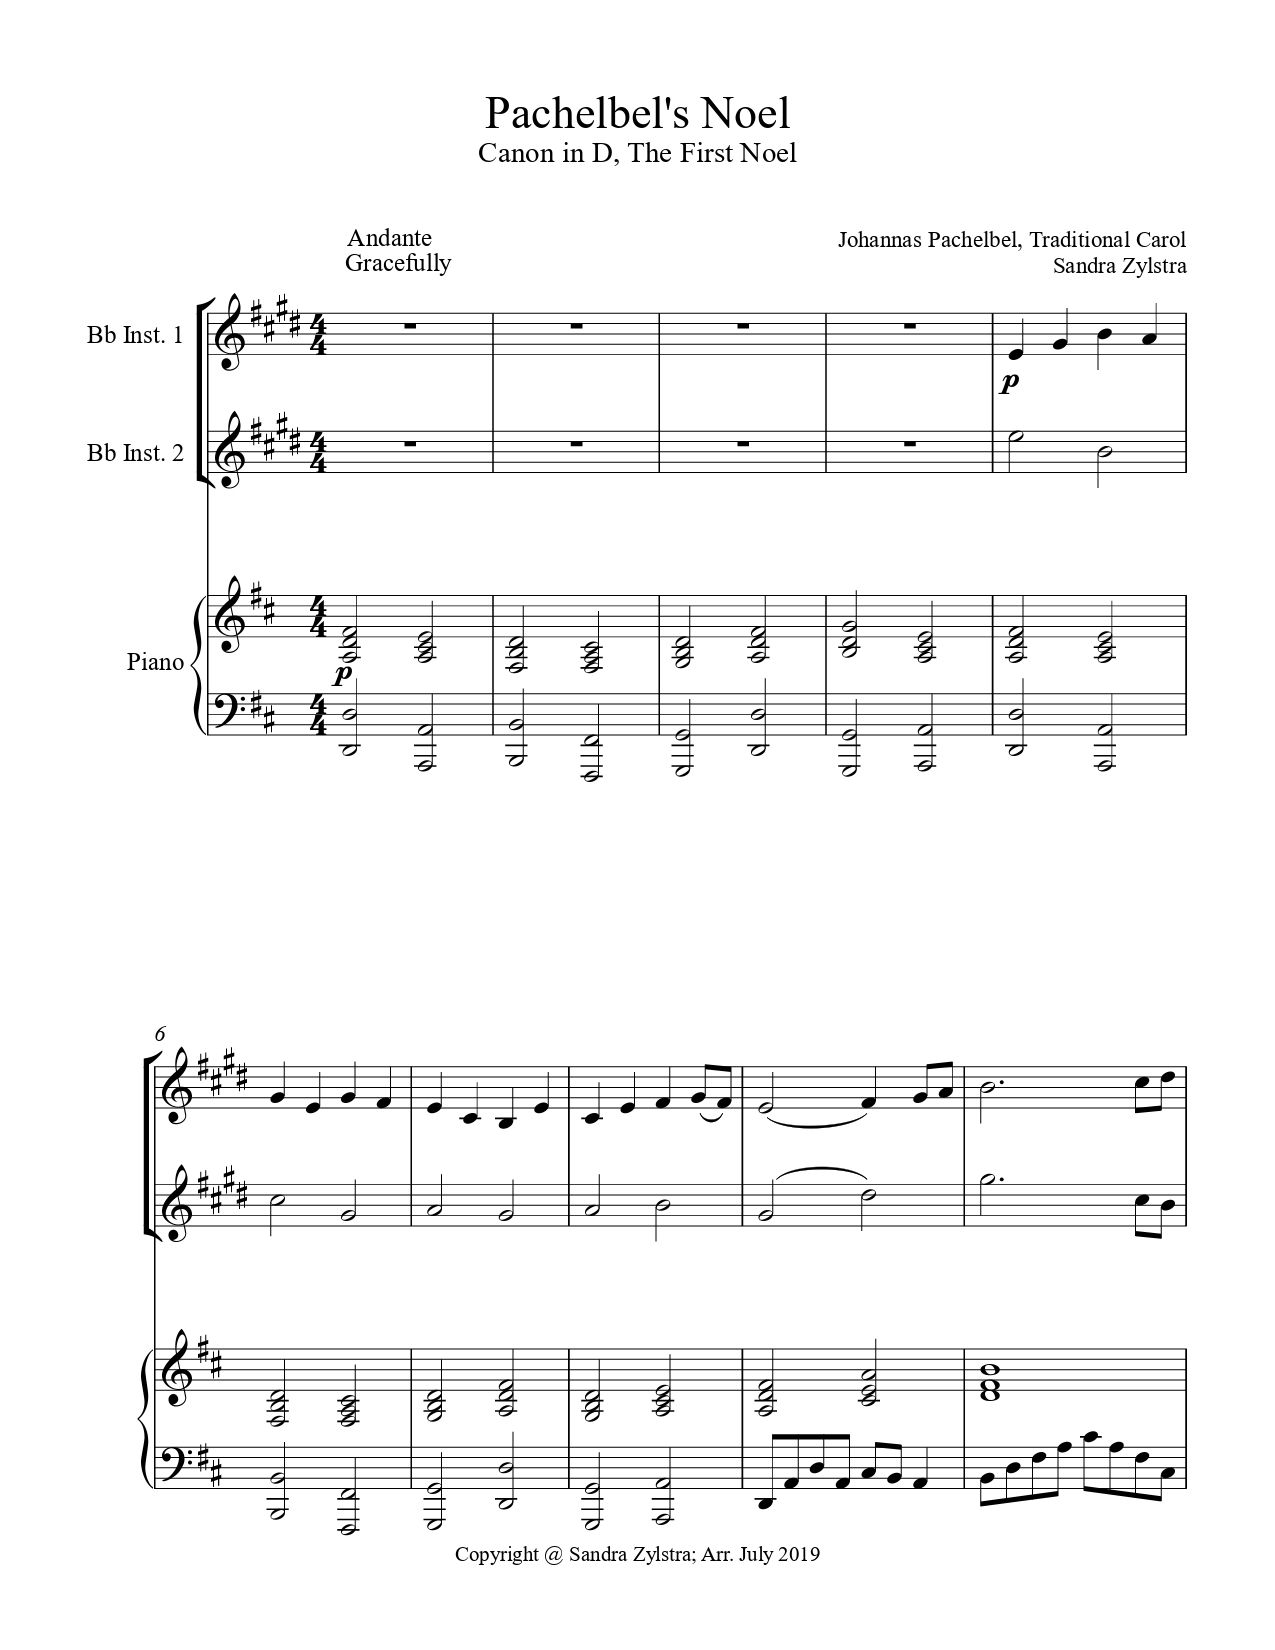 Pachelbels Noel Bb instrument duet parts cover page 00021